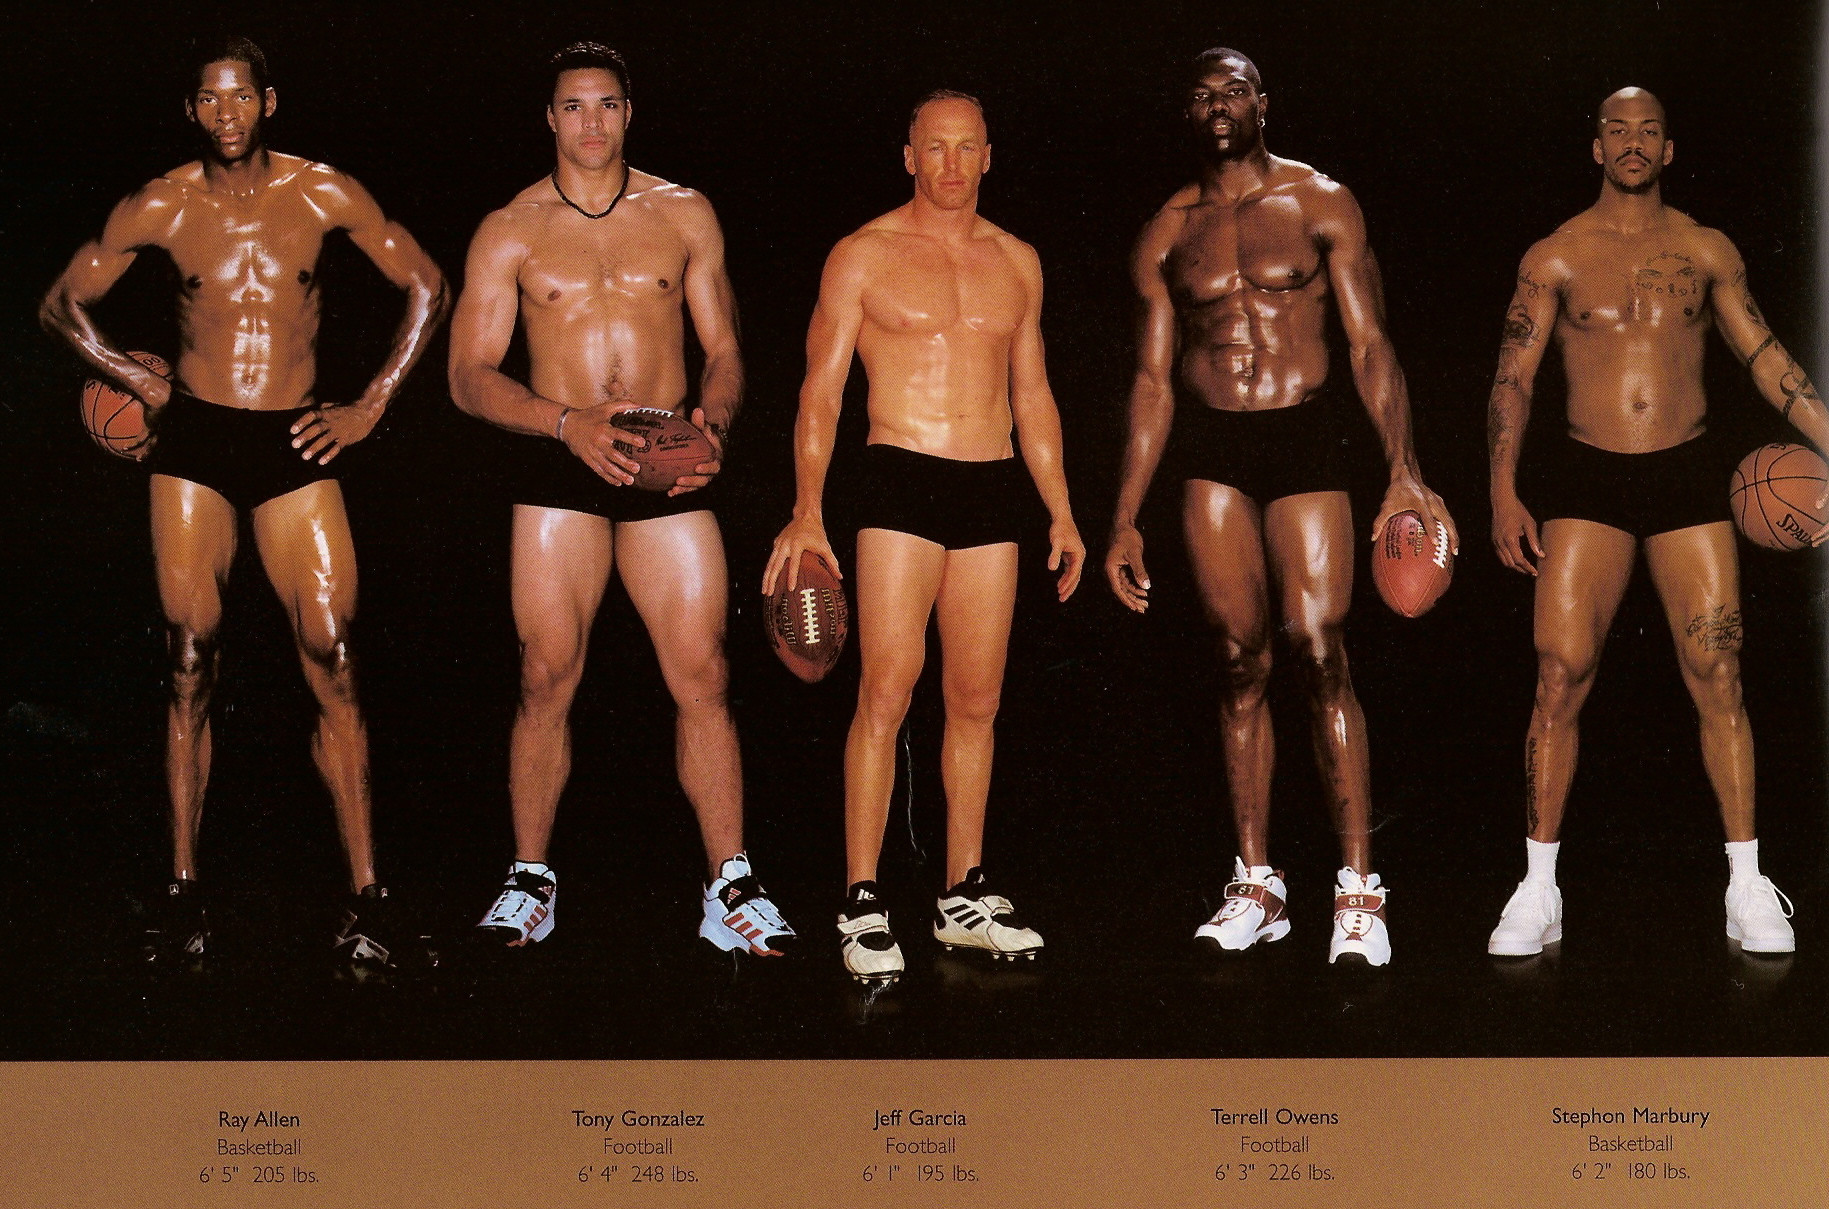 Howard Schatz / слева направо: баскетбол, американский футбол, тоже американский футбол, снова американский футбол, баскетбол.